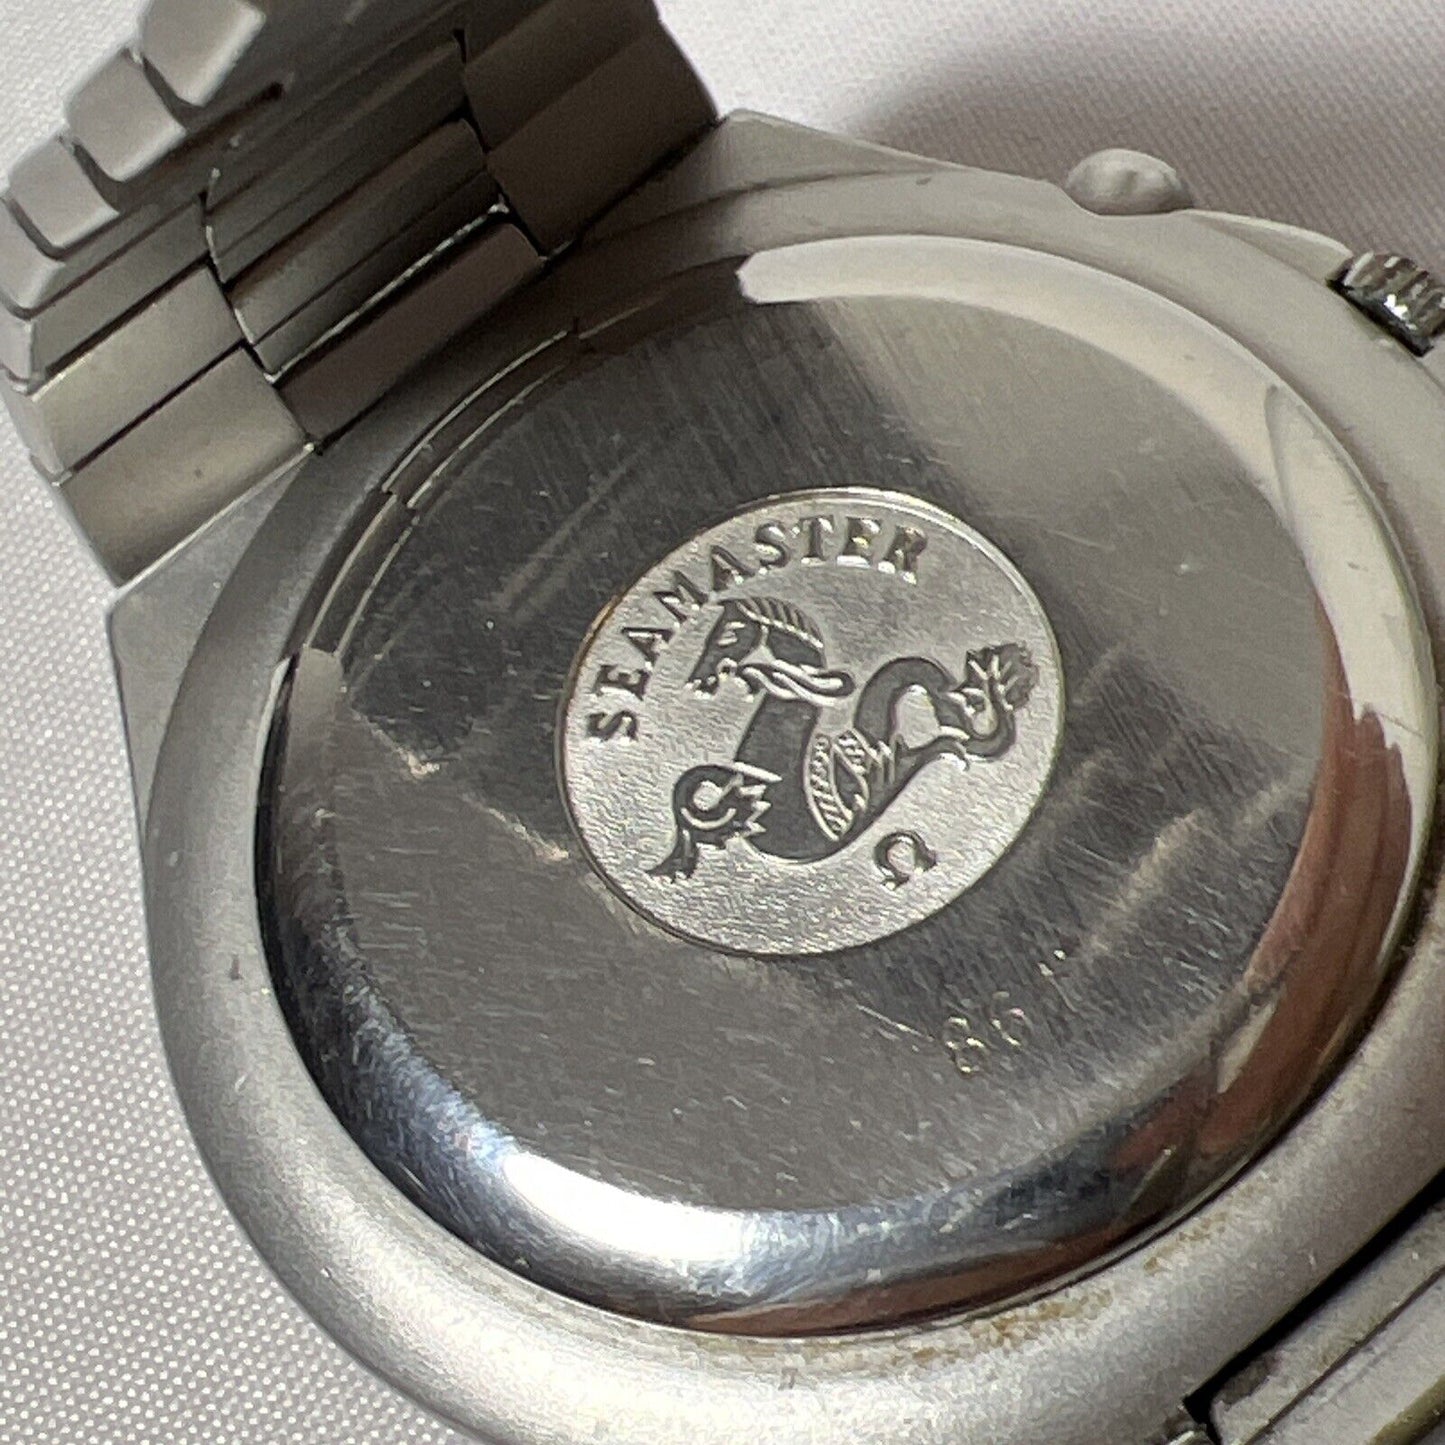 Omega Speedmaster Teutonic Men's Watch Ref 1450040 Cal 861 Steel Chronograph